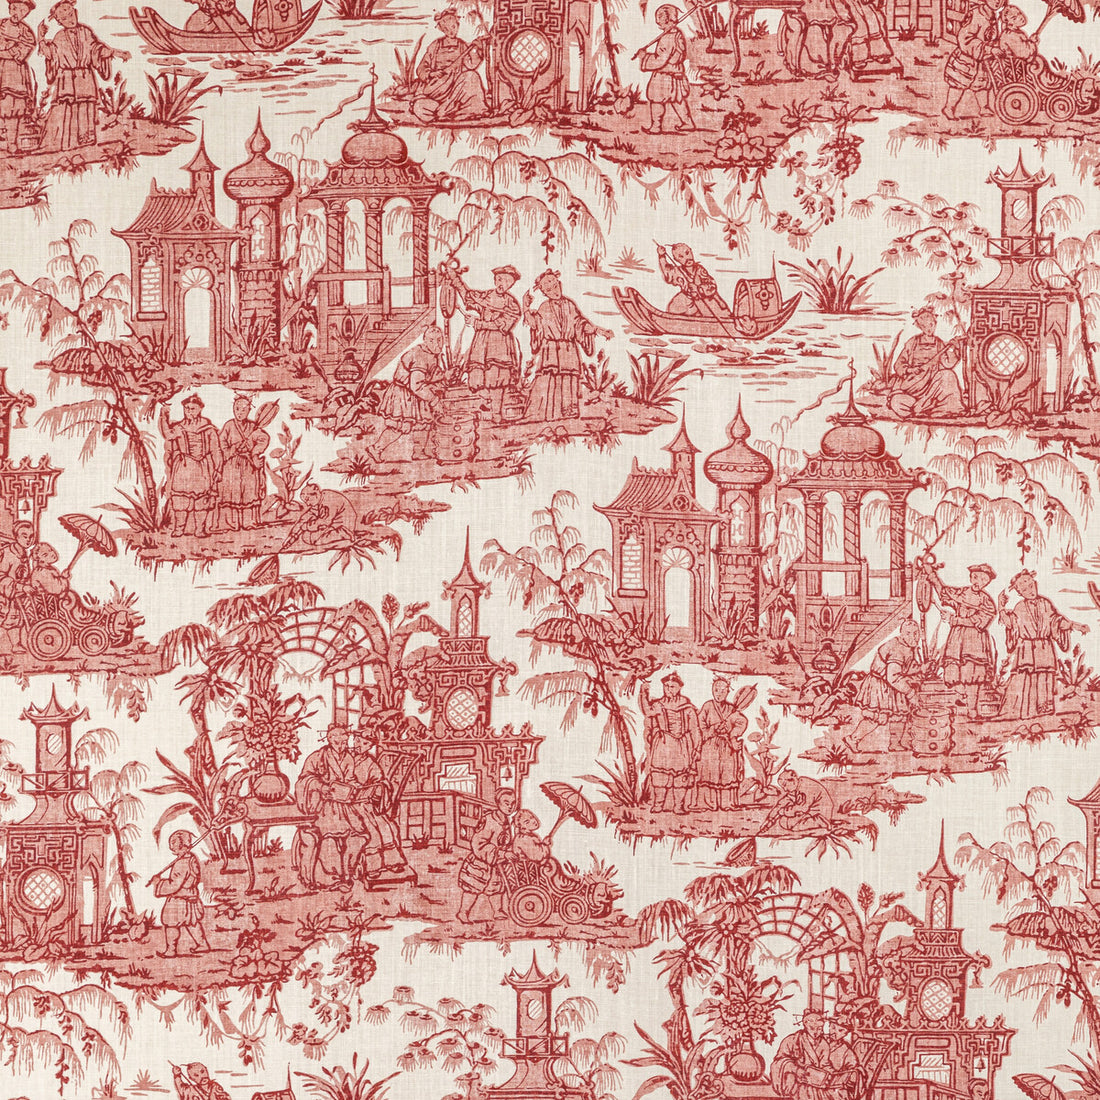 Pagoda Toile fabric in garnet color - pattern 2020224.19.0 - by Lee Jofa in the Oscar De La Renta IV collection